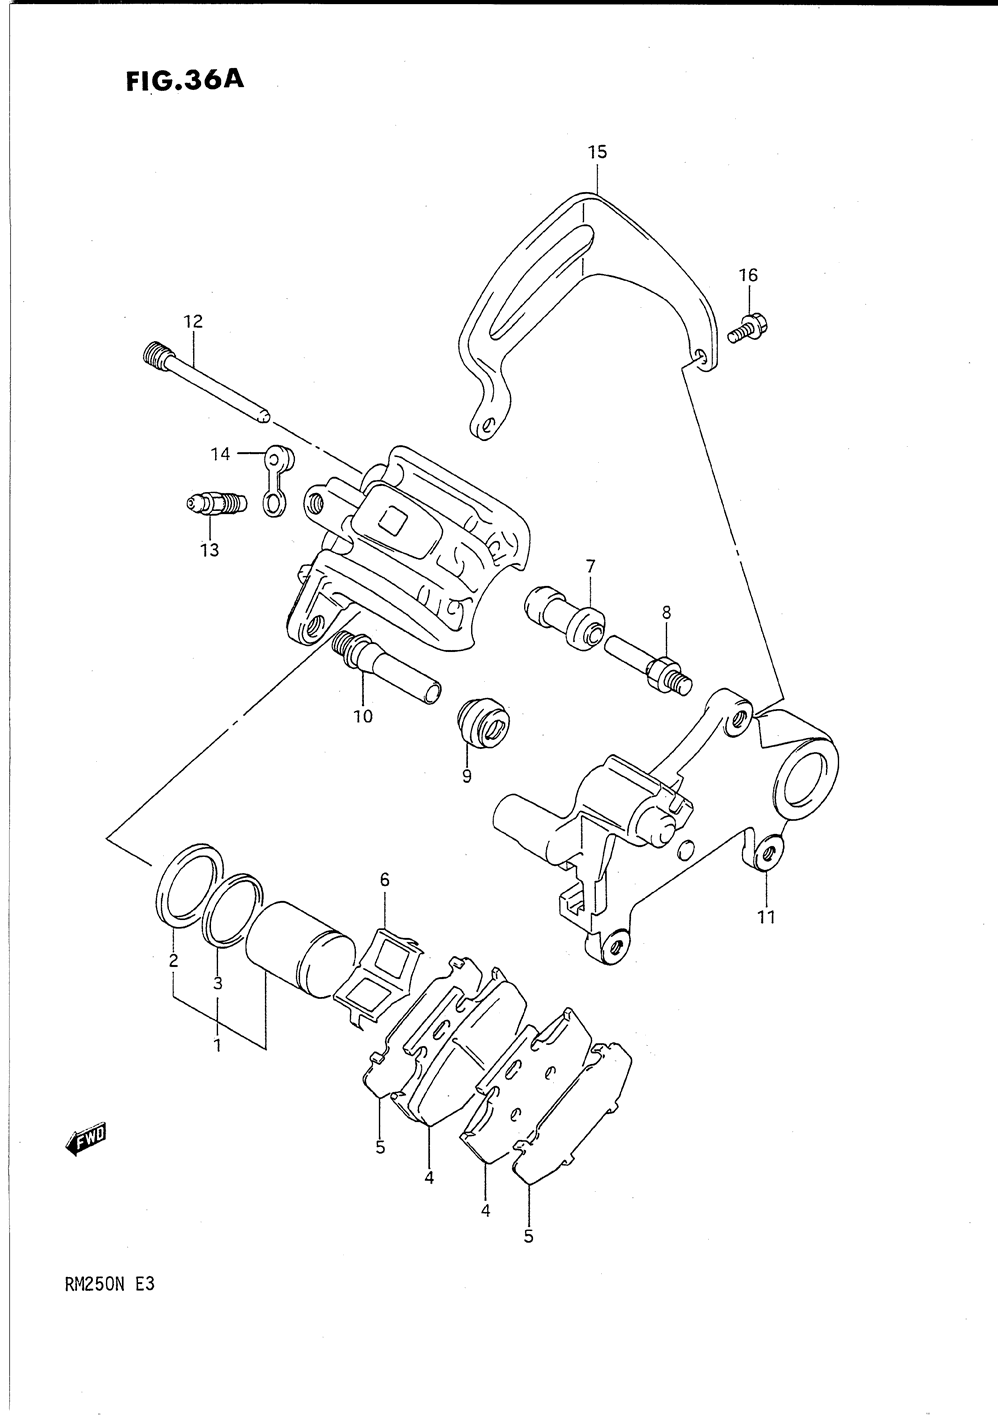 Rear calipers (model l)